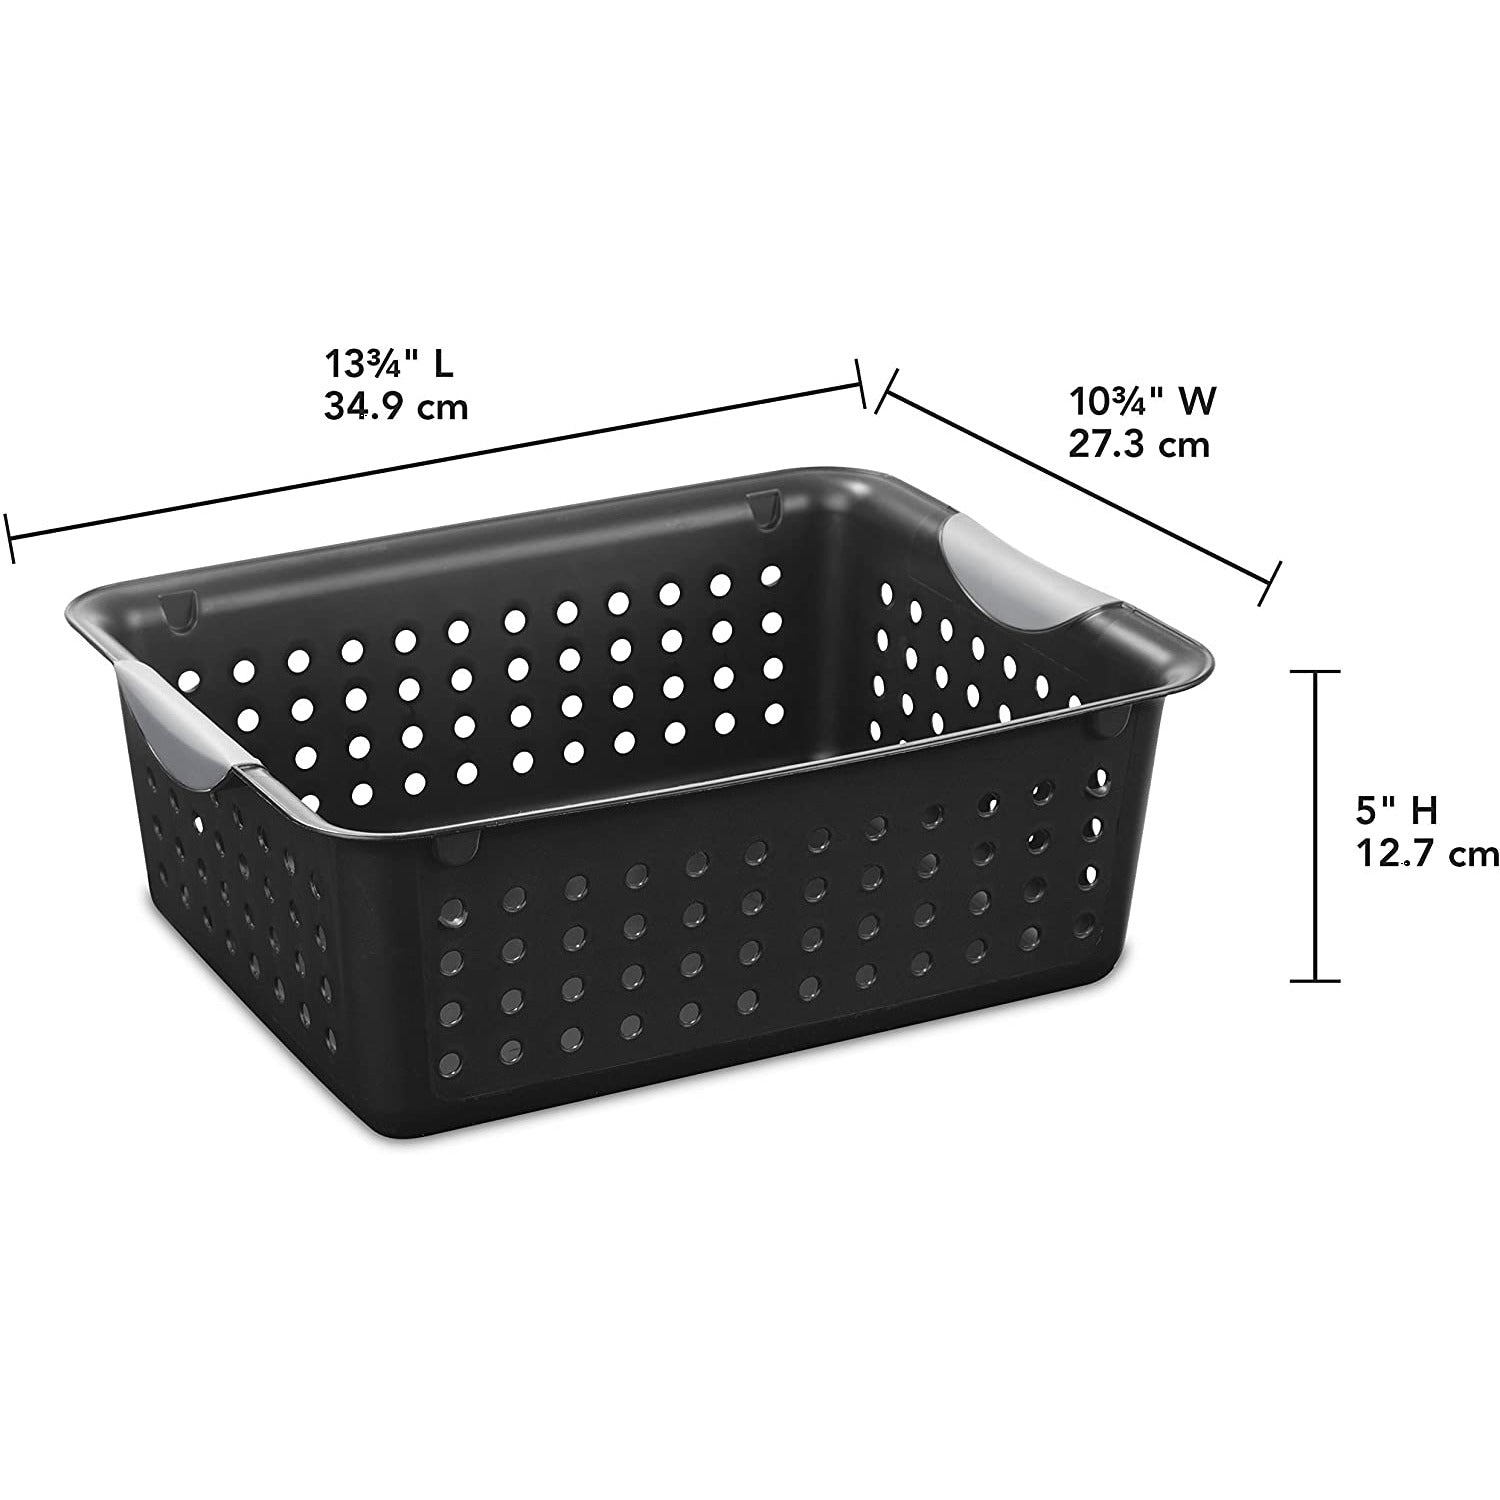 Sterilite Deep Ultra Plastic Storage Bin Organizer Basket w/ Handles (18 Pack)